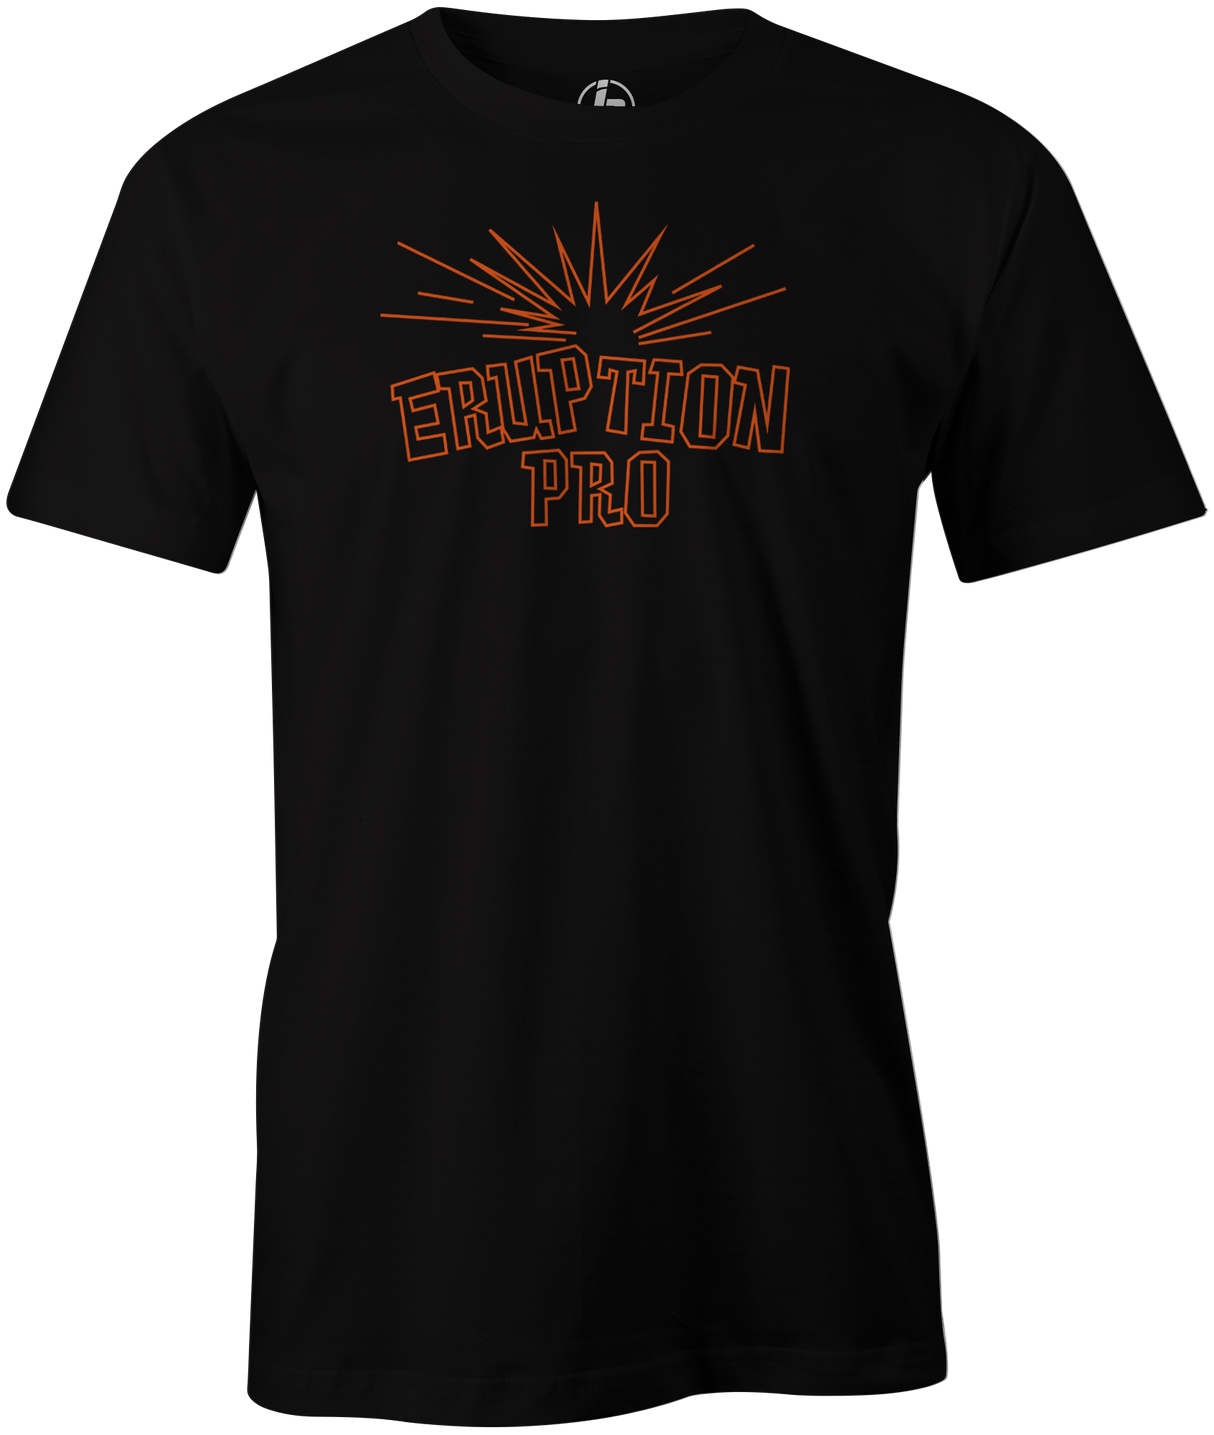 Eruption Pro Men's T-Shirt, Black, Bowling, Columbia 300, tshirt, tee, tee-shirt, tee shirt, cool, comfortable.